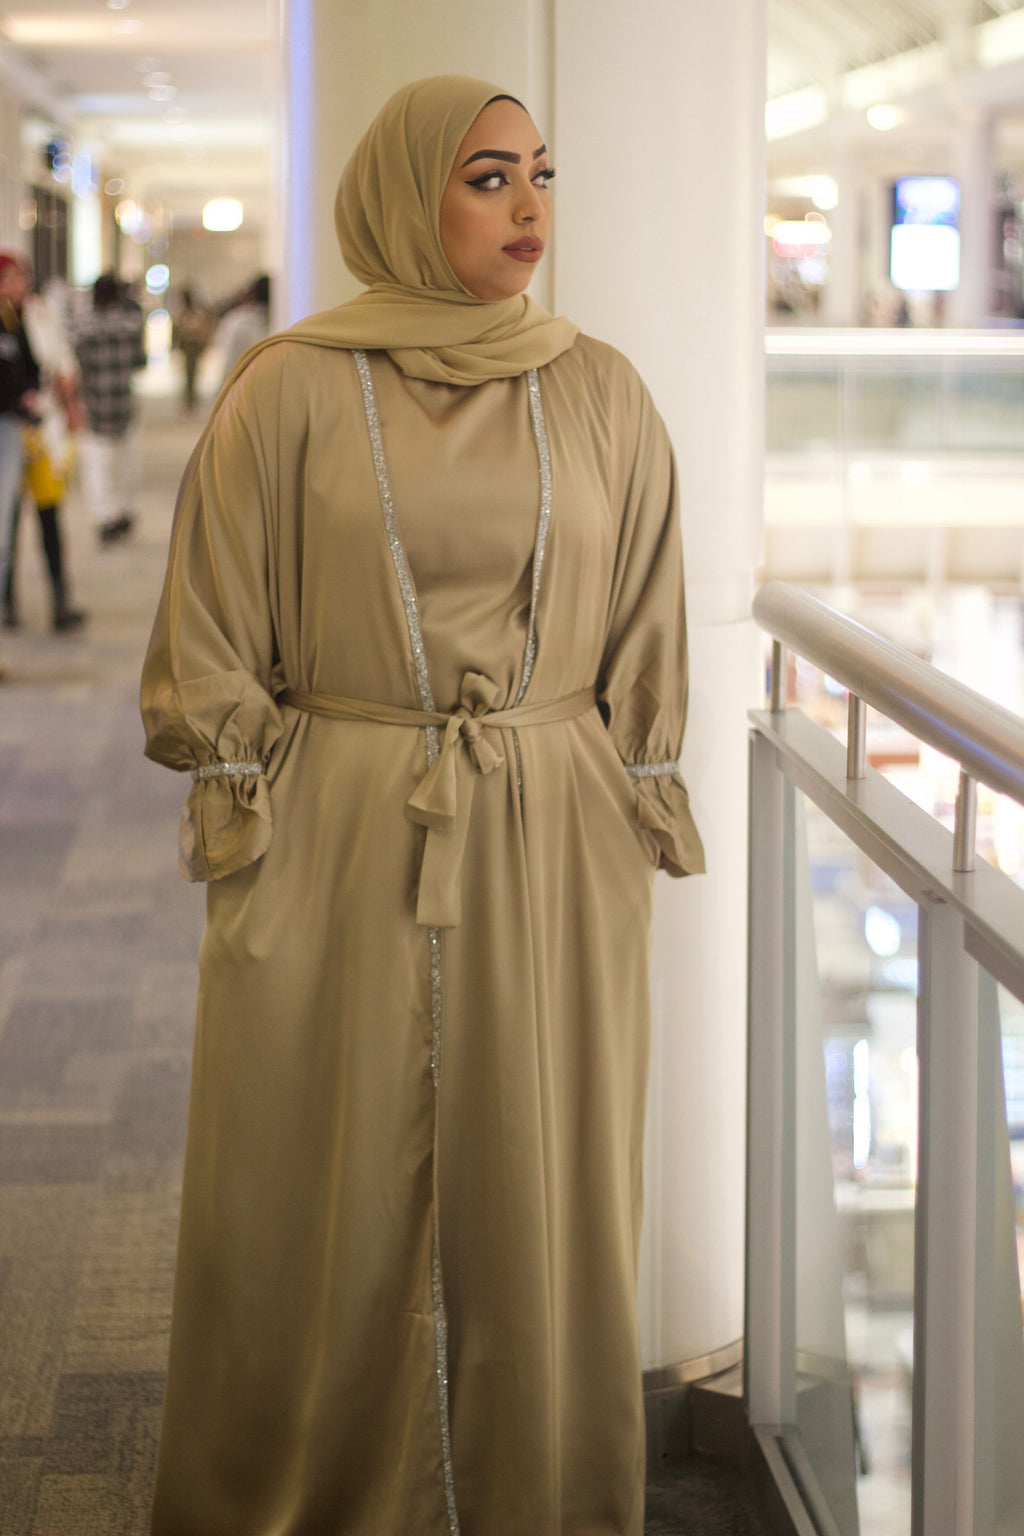 Satin Bling Abaya with matching under abaya dress